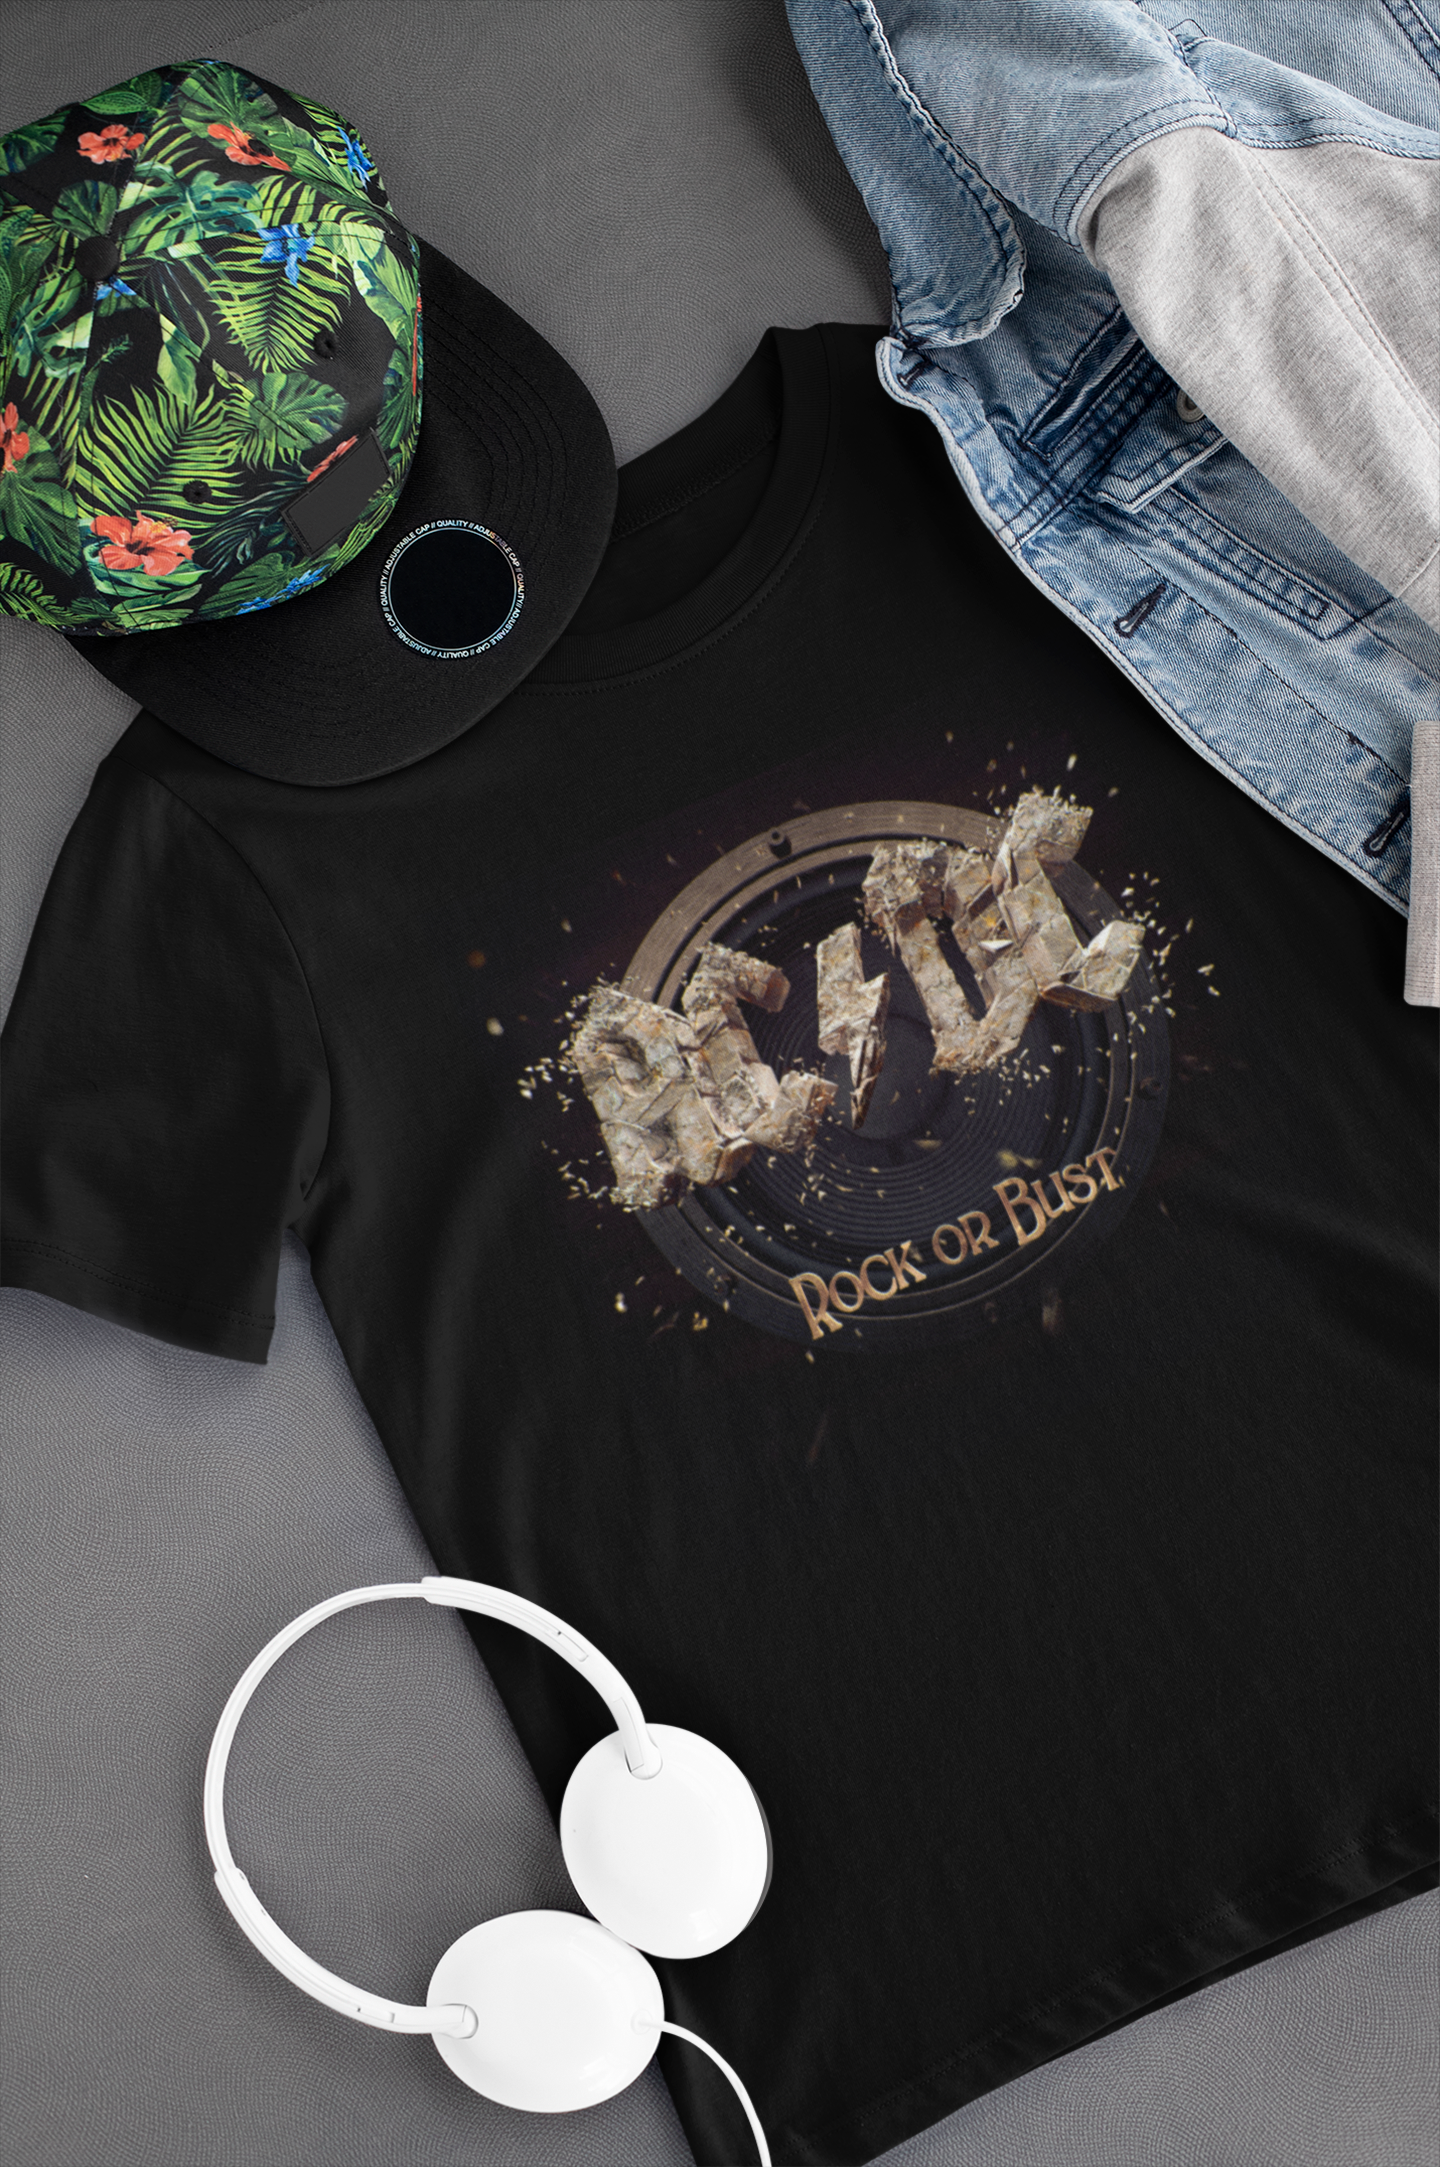 Camiseta "Rock or Bust - ACDC" - Álbum - Música